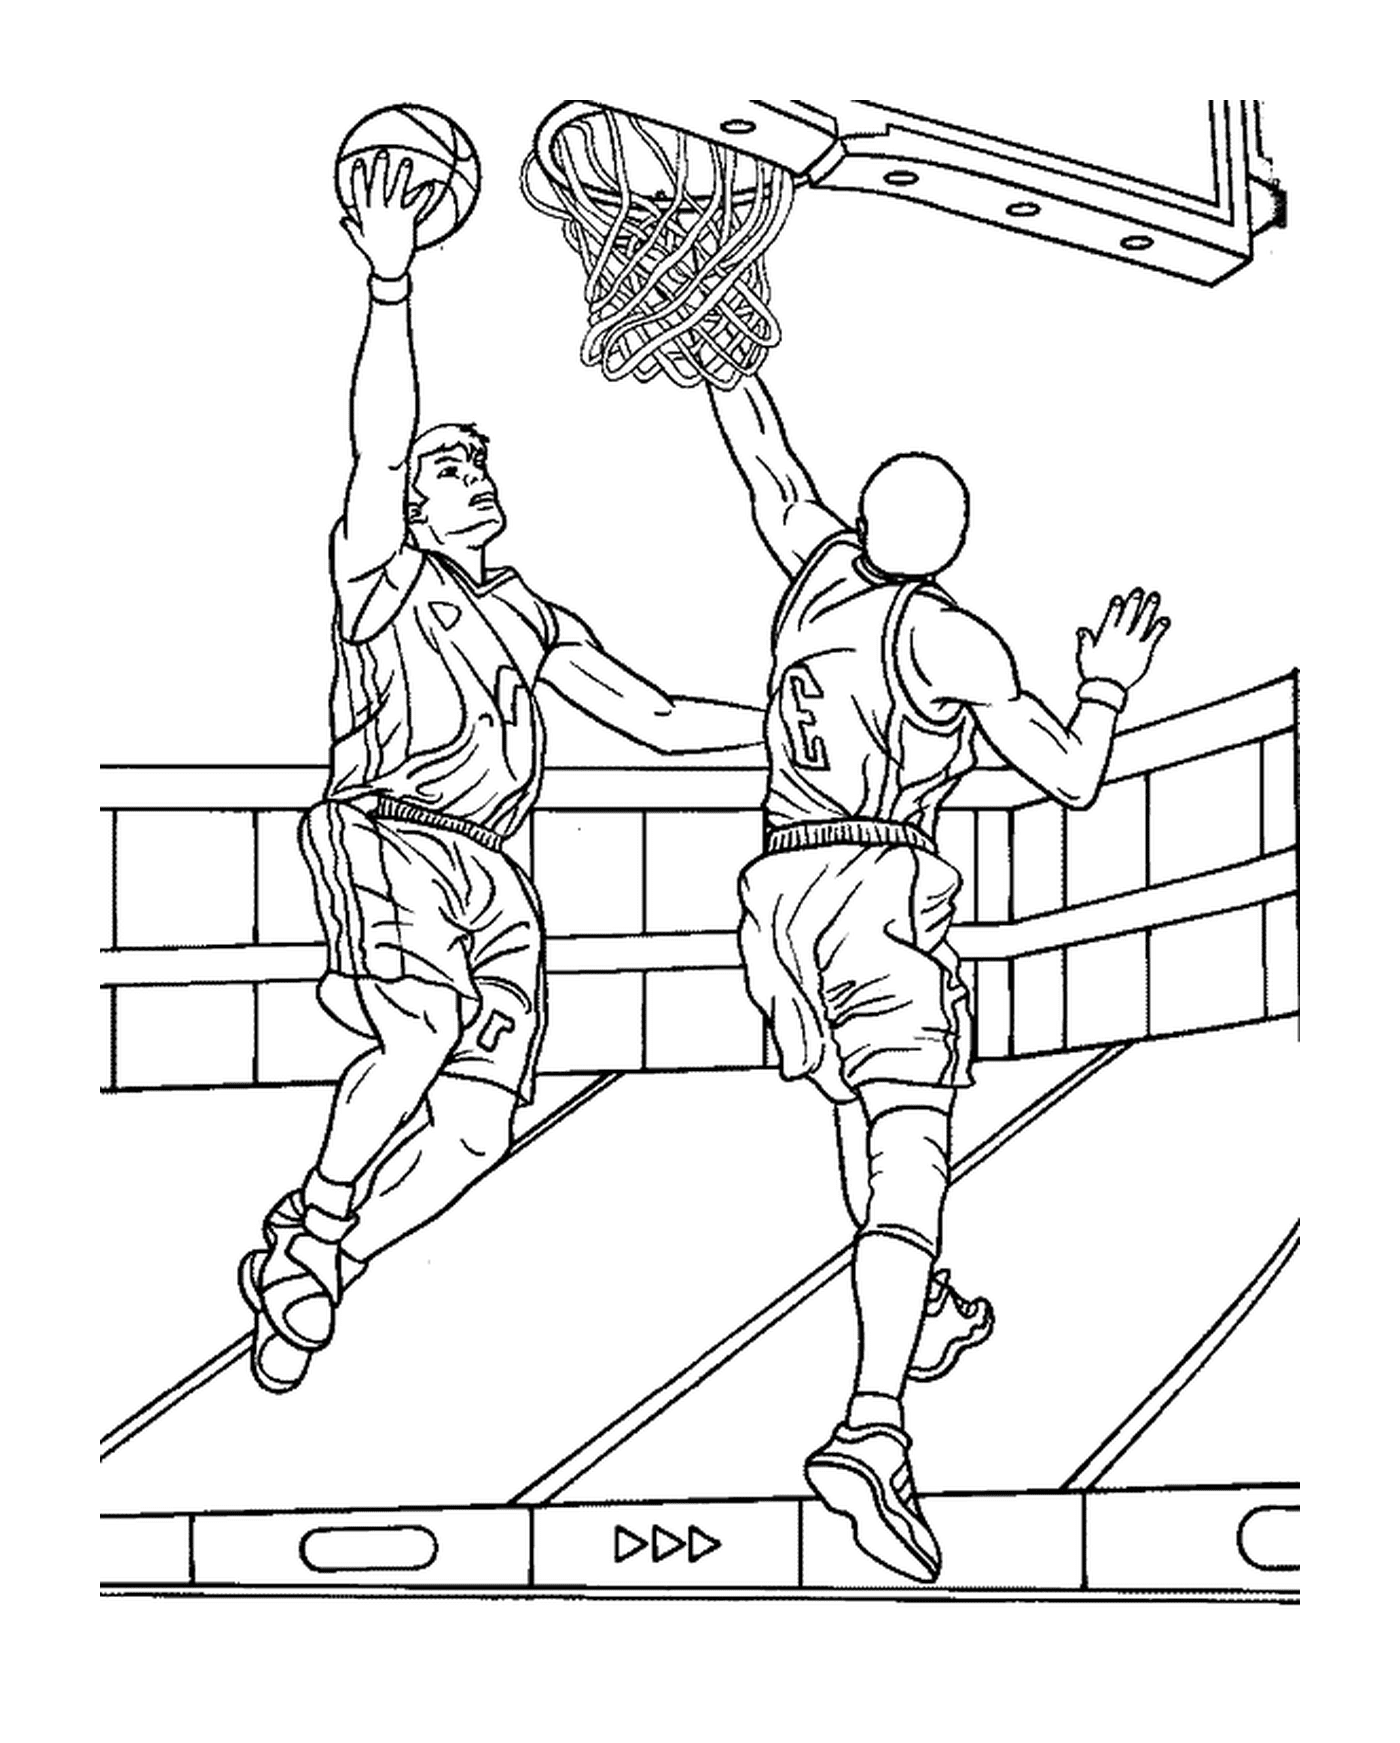 coloriage dessin le joueur de basketball va marquer un panier malgre le defenseur